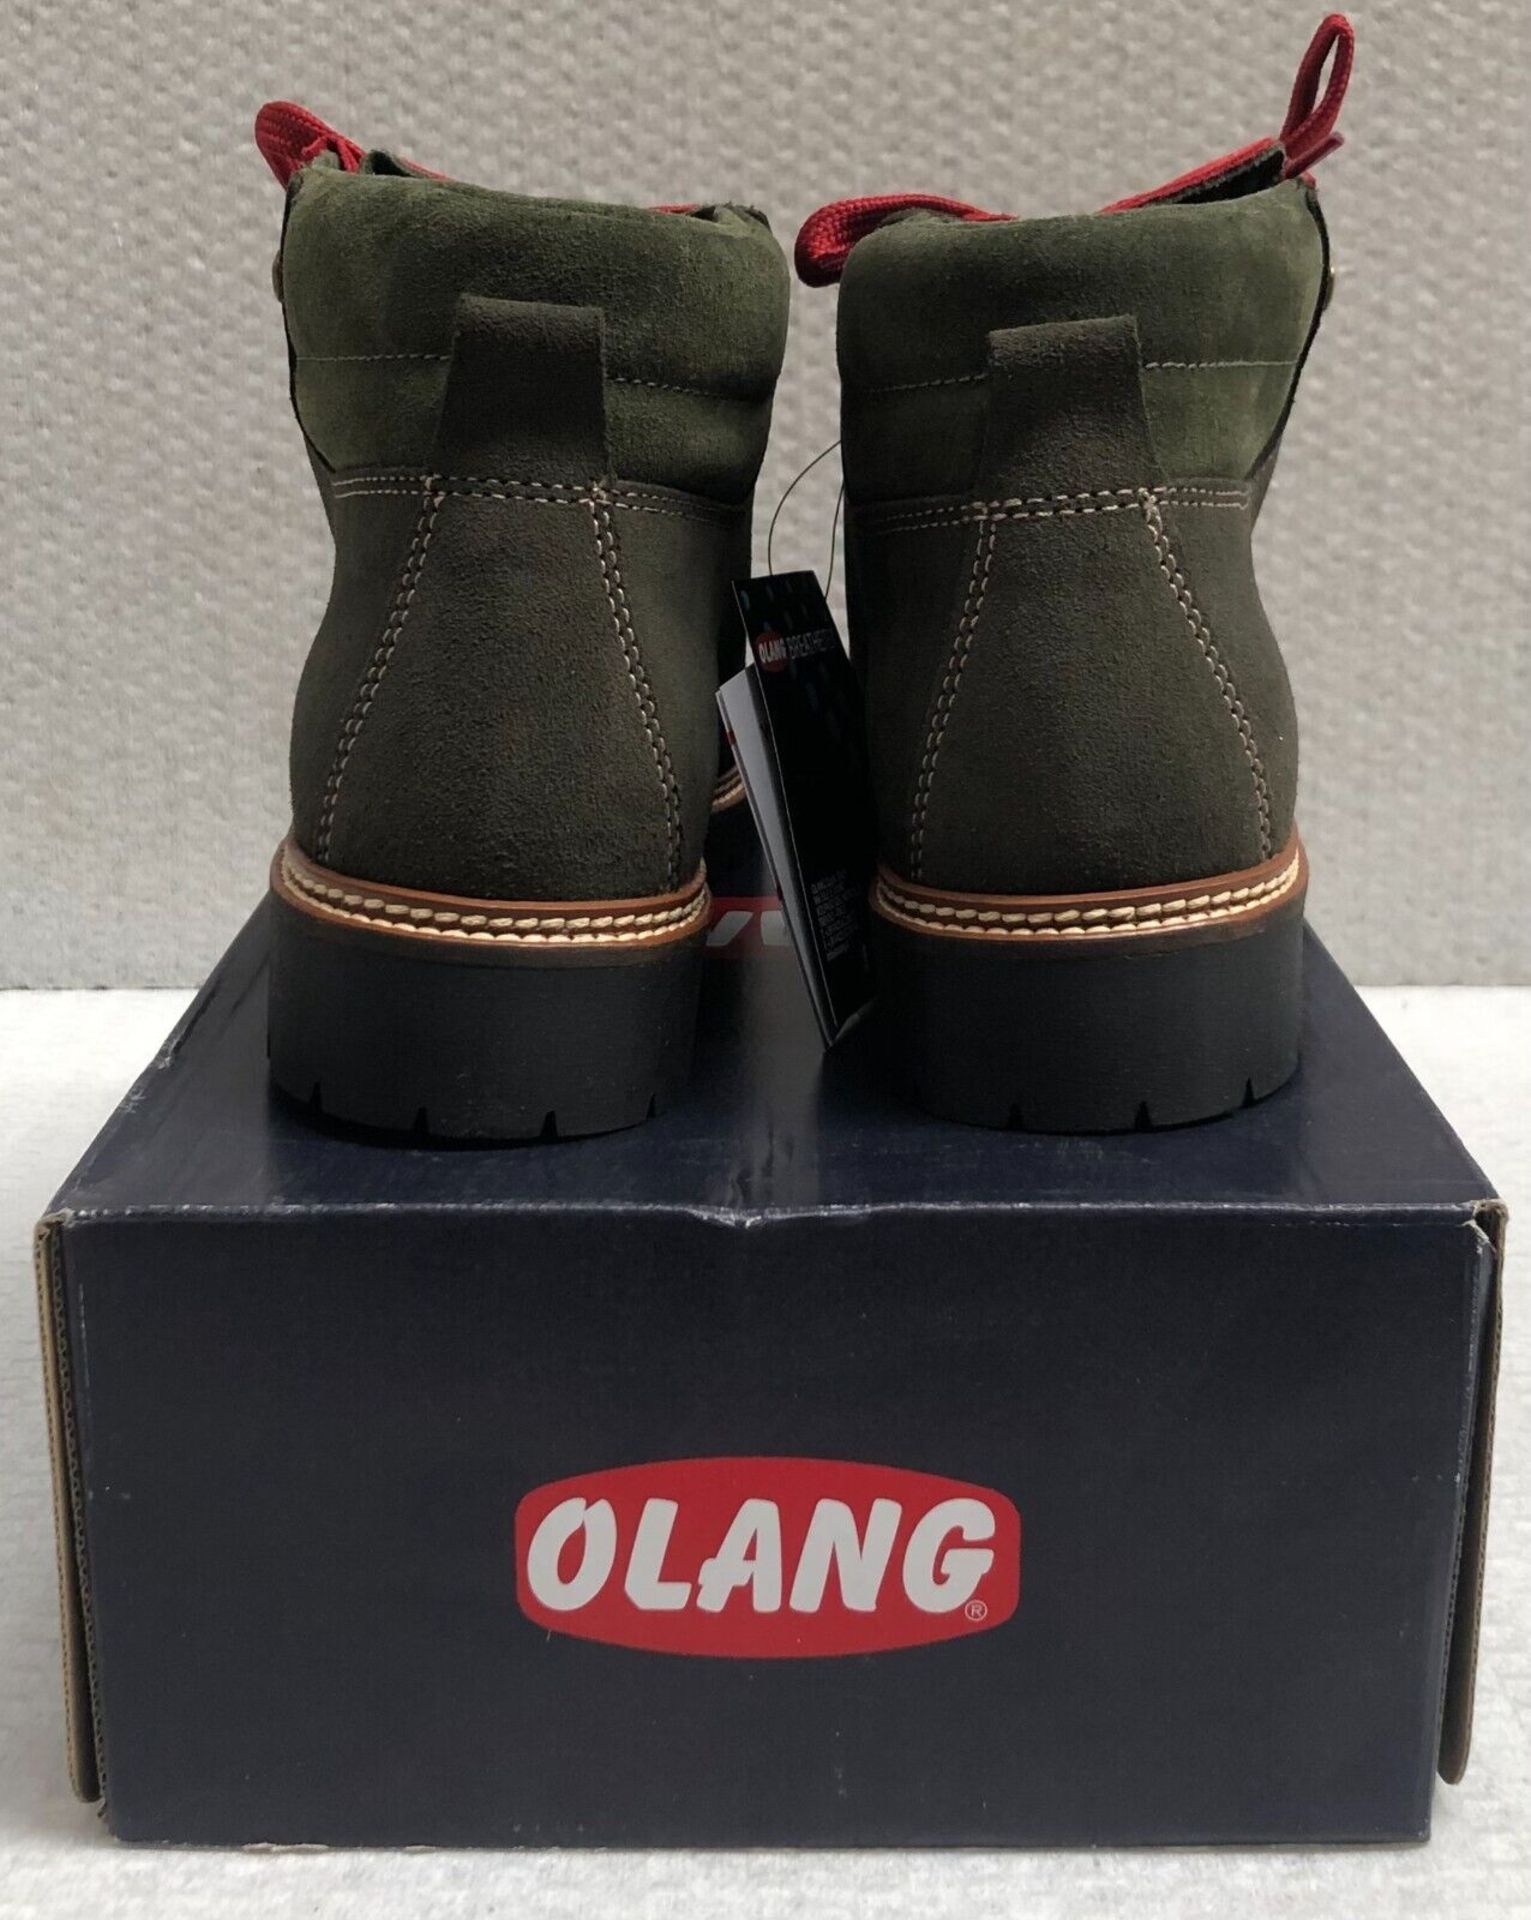 1 x Pair of Designer Olang Women's Winter Boots - Merano.Win.BTX 834 Muschio - Euro Size 40 - New - Image 3 of 5